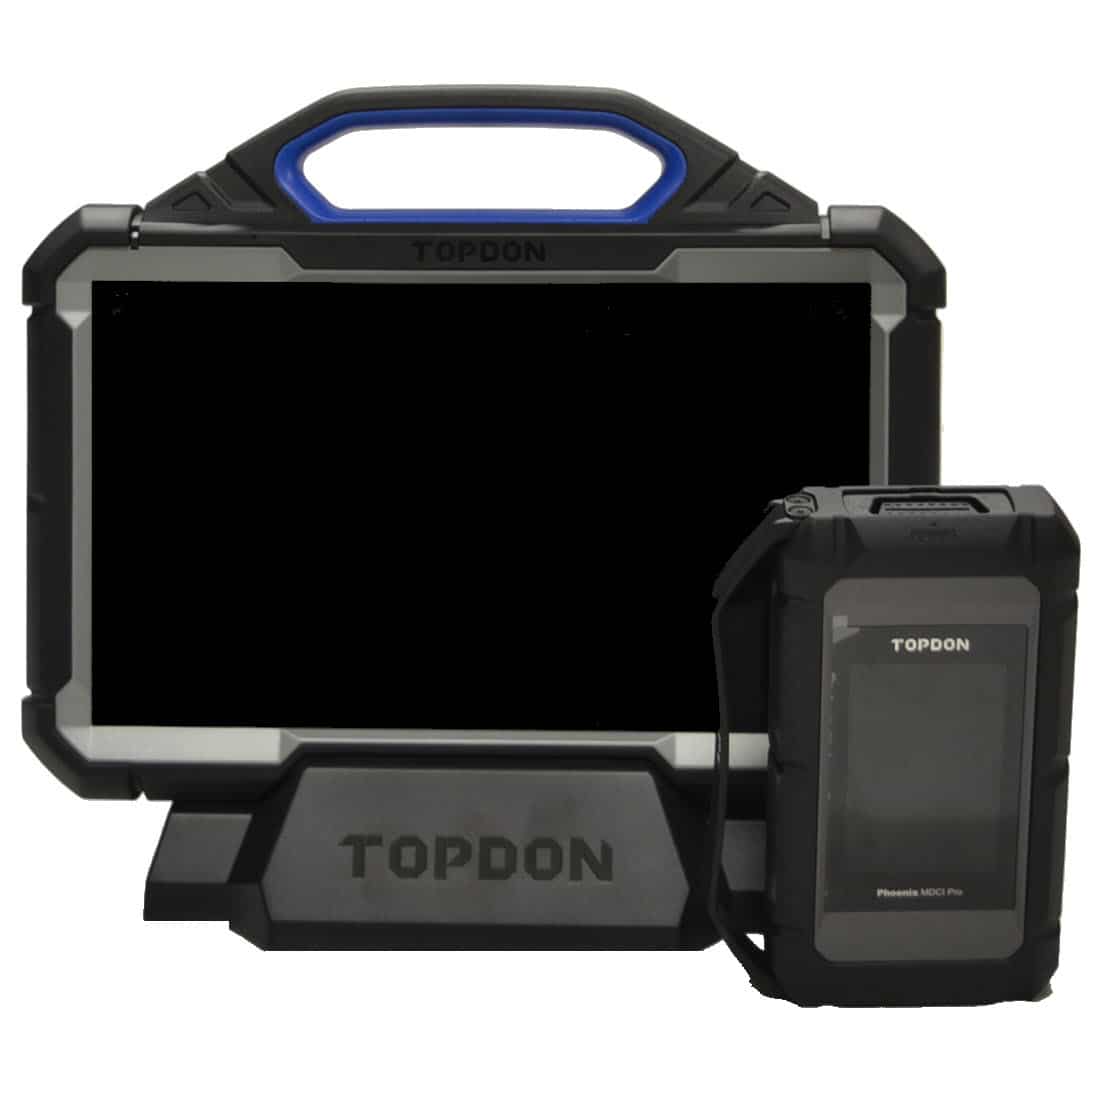 TOPDON Phoenix Lite 2 Wireless Automotive Diagnostic Scan Tool OBD2 Scanner